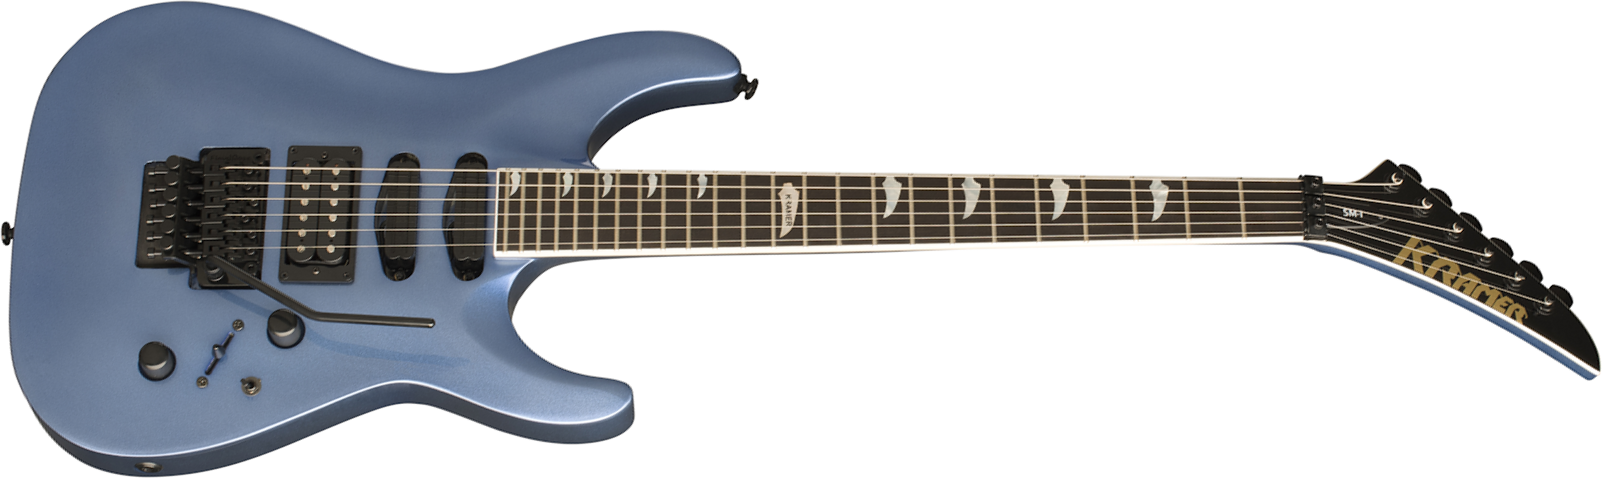 Kramer Sm-1 Original Hss Seymour Duncan Fr Eb - Candy Blue - E-Gitarre in Str-Form - Main picture